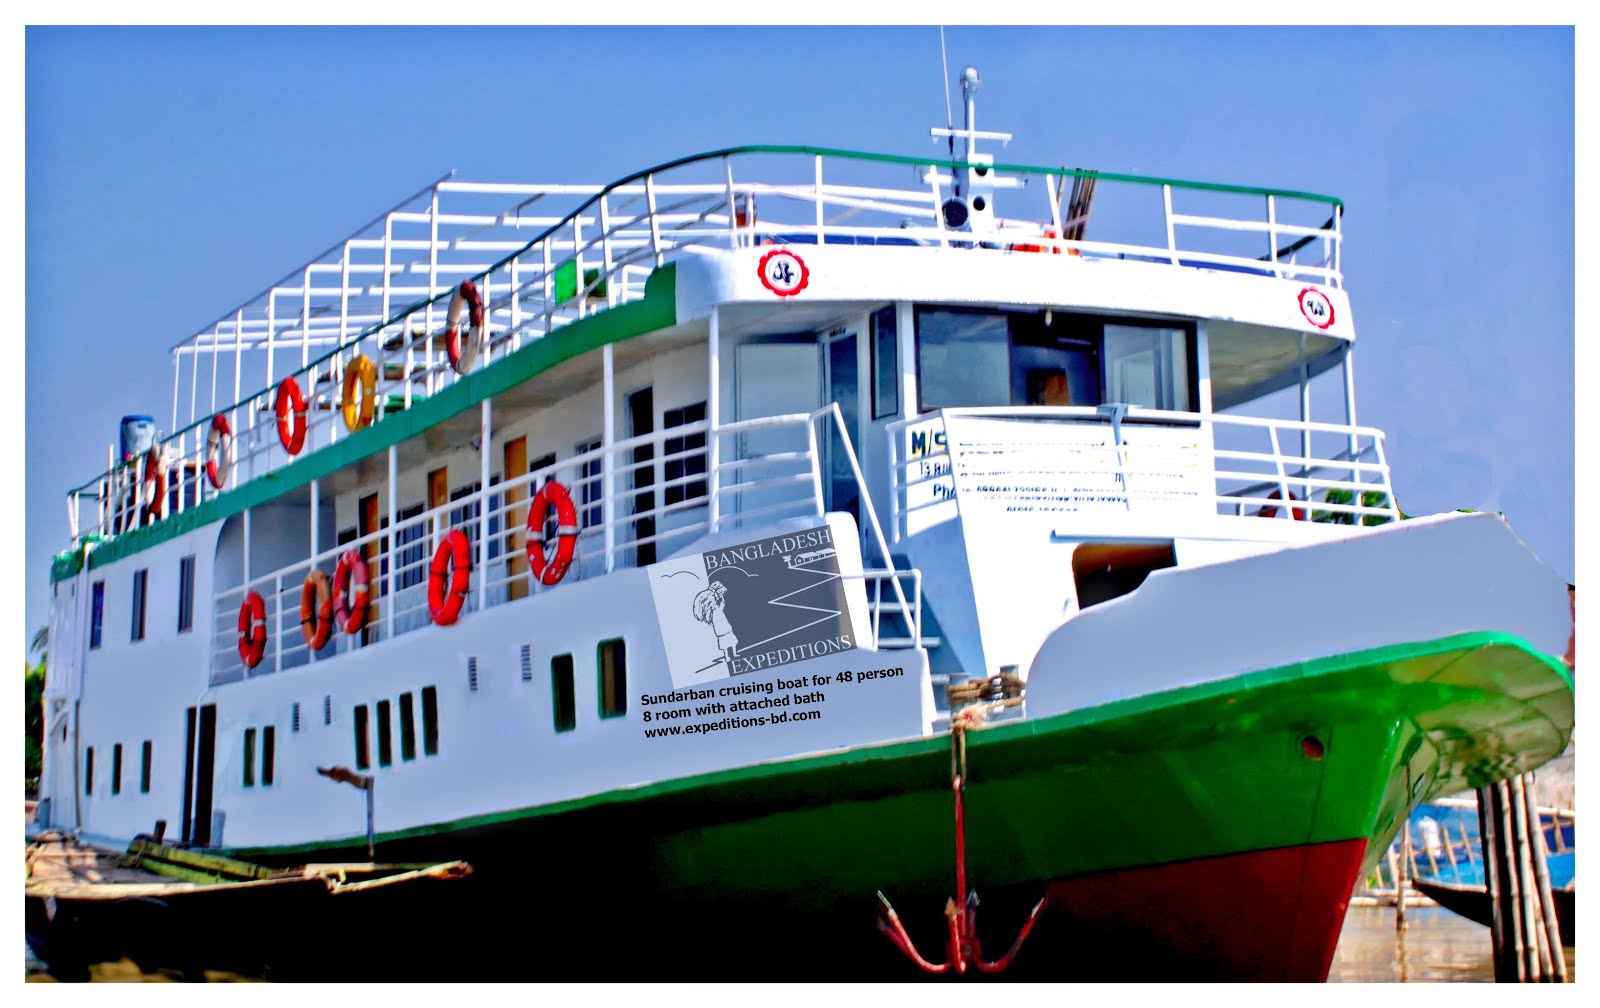 Sundarban boat for 48 person